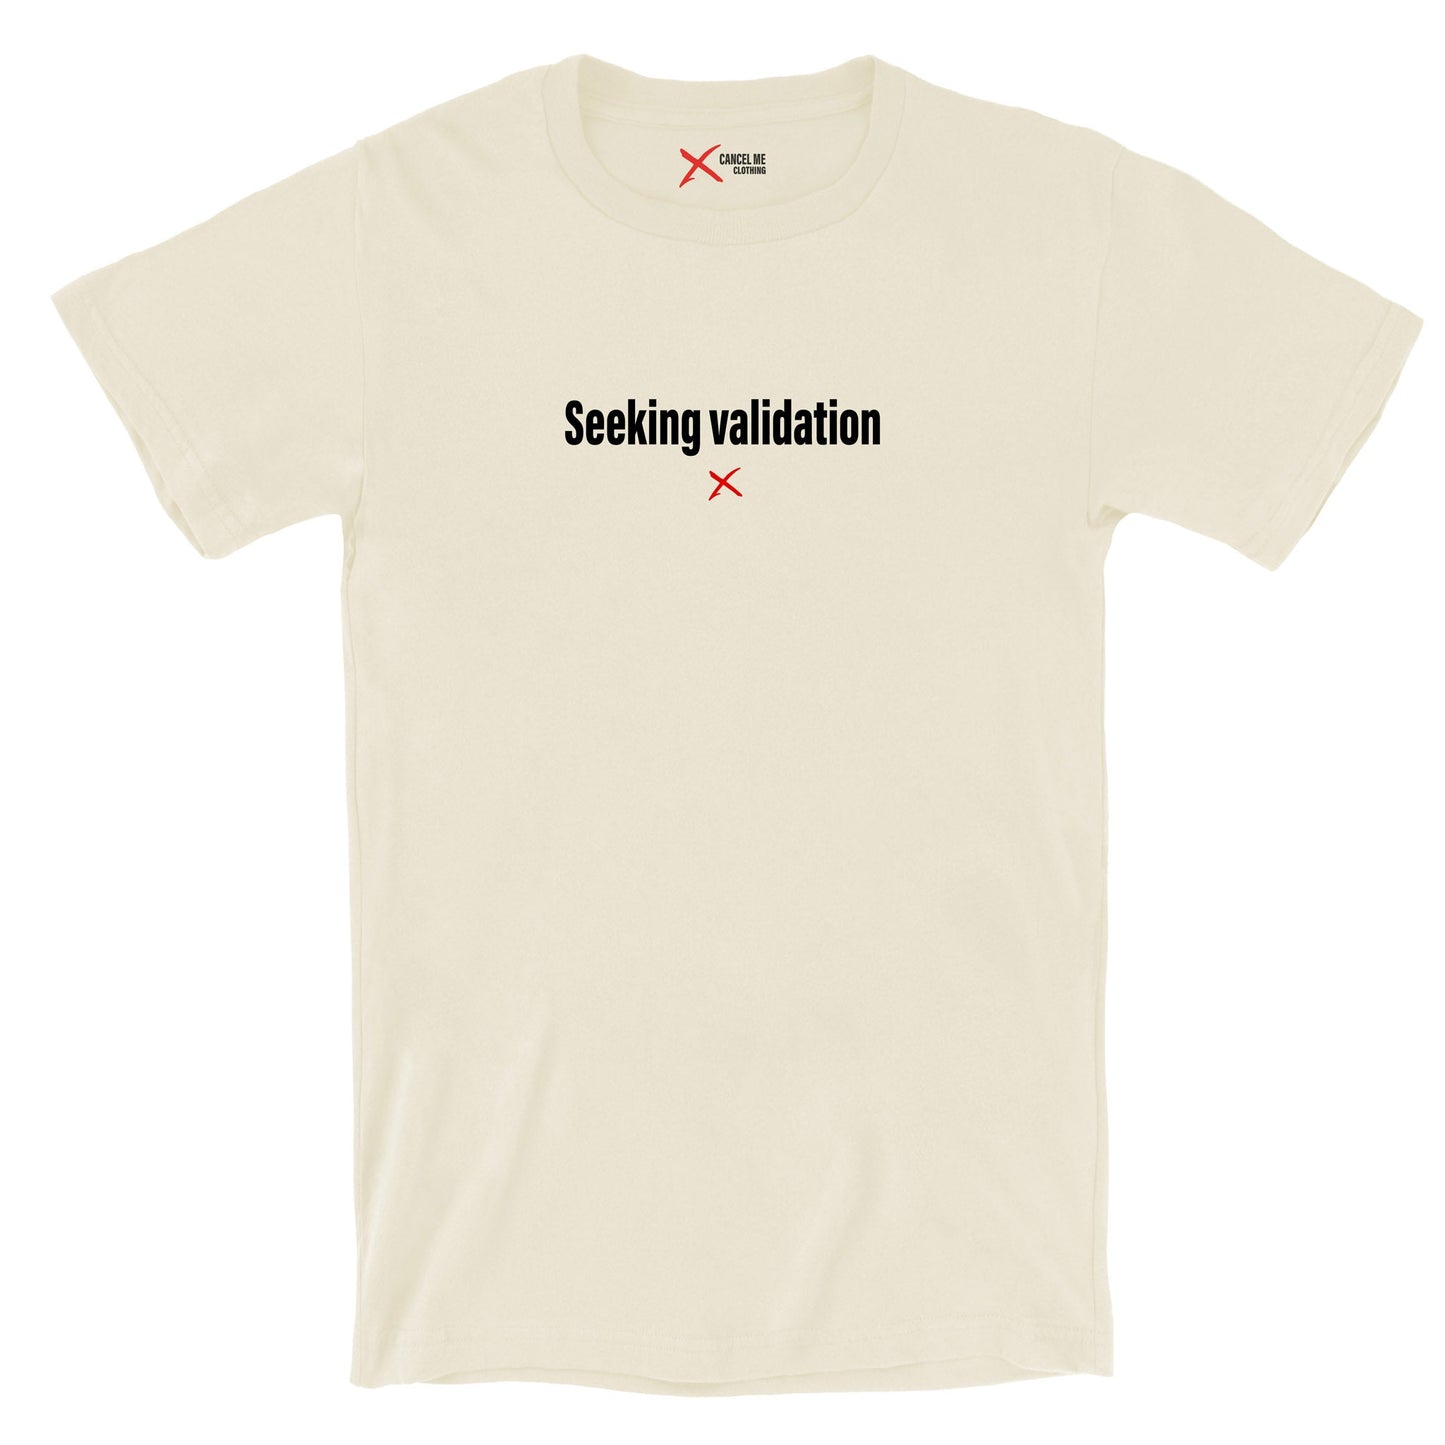 Seeking validation - Shirt